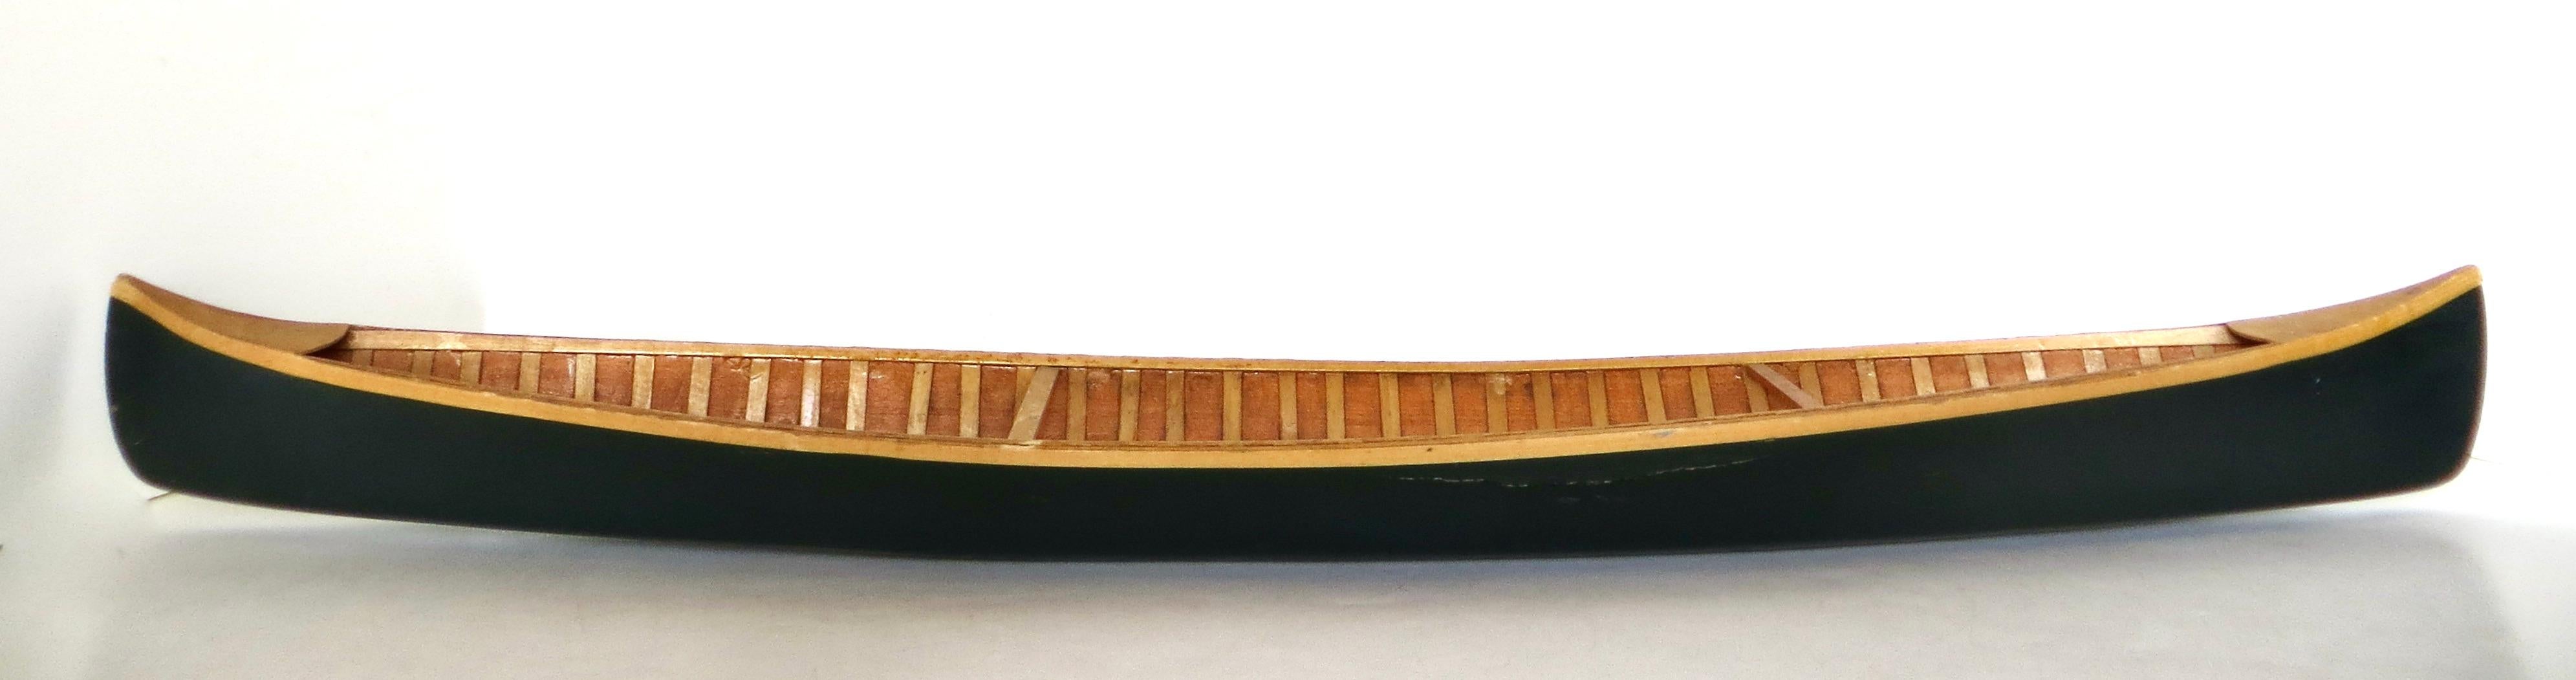 Miniature Model Wooden Canoe, American Circa 1950's For Sale 2